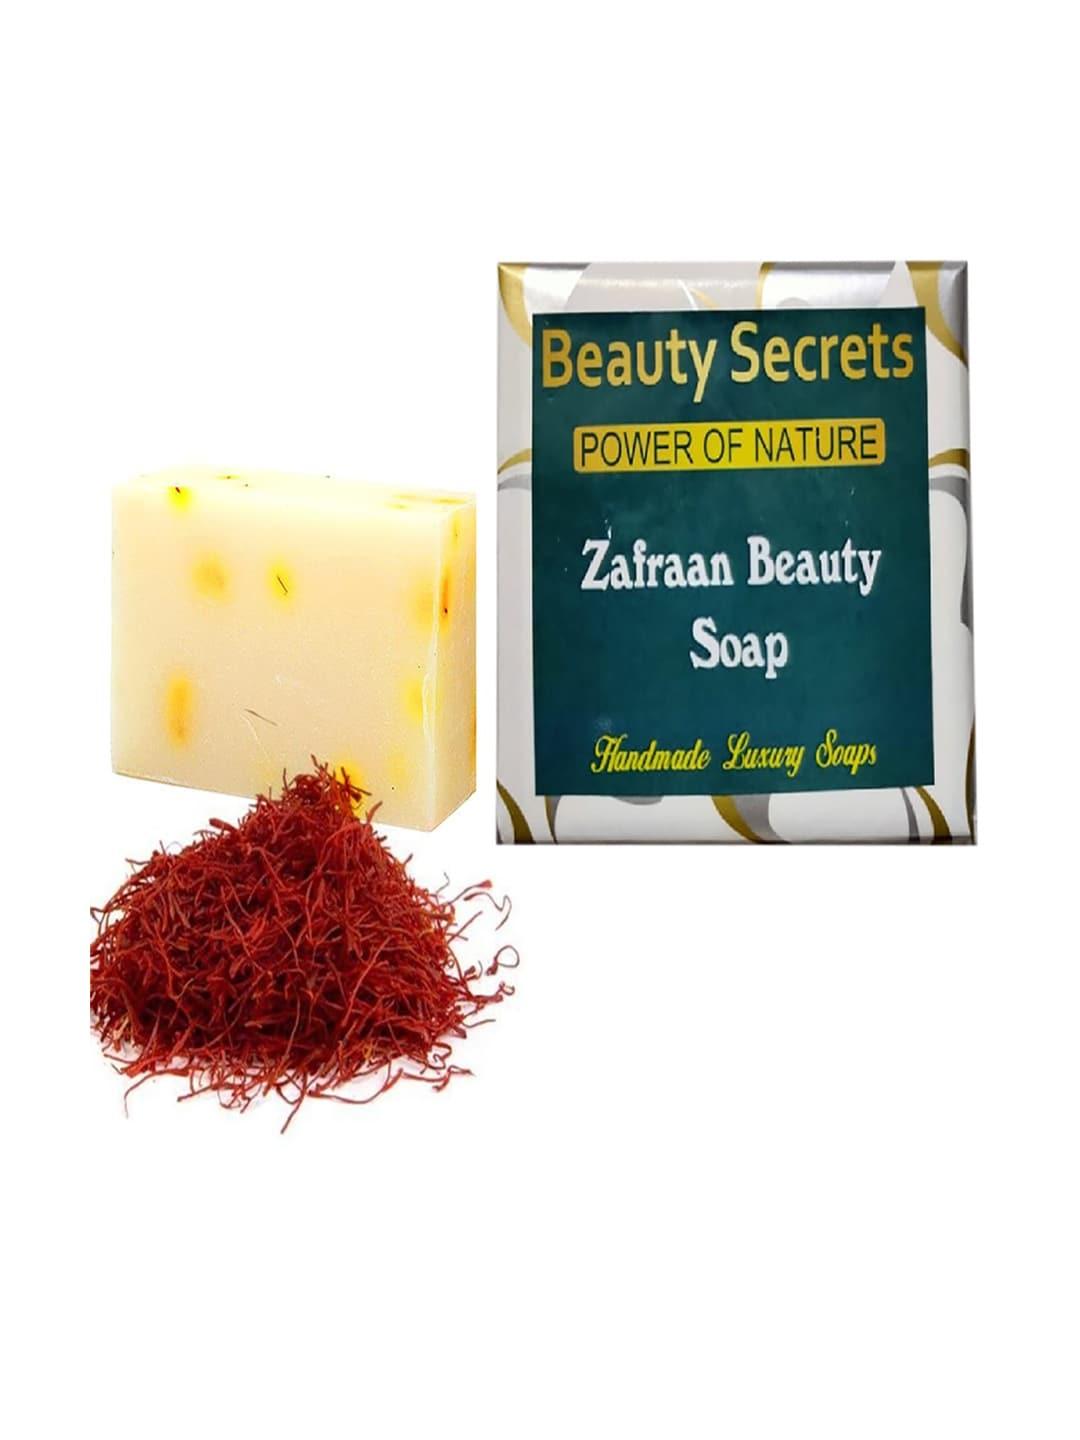 Beauty Secrets Power of Nature Zafraan Handmade Luxury Beauty Soap with Coconut Oil - 100g